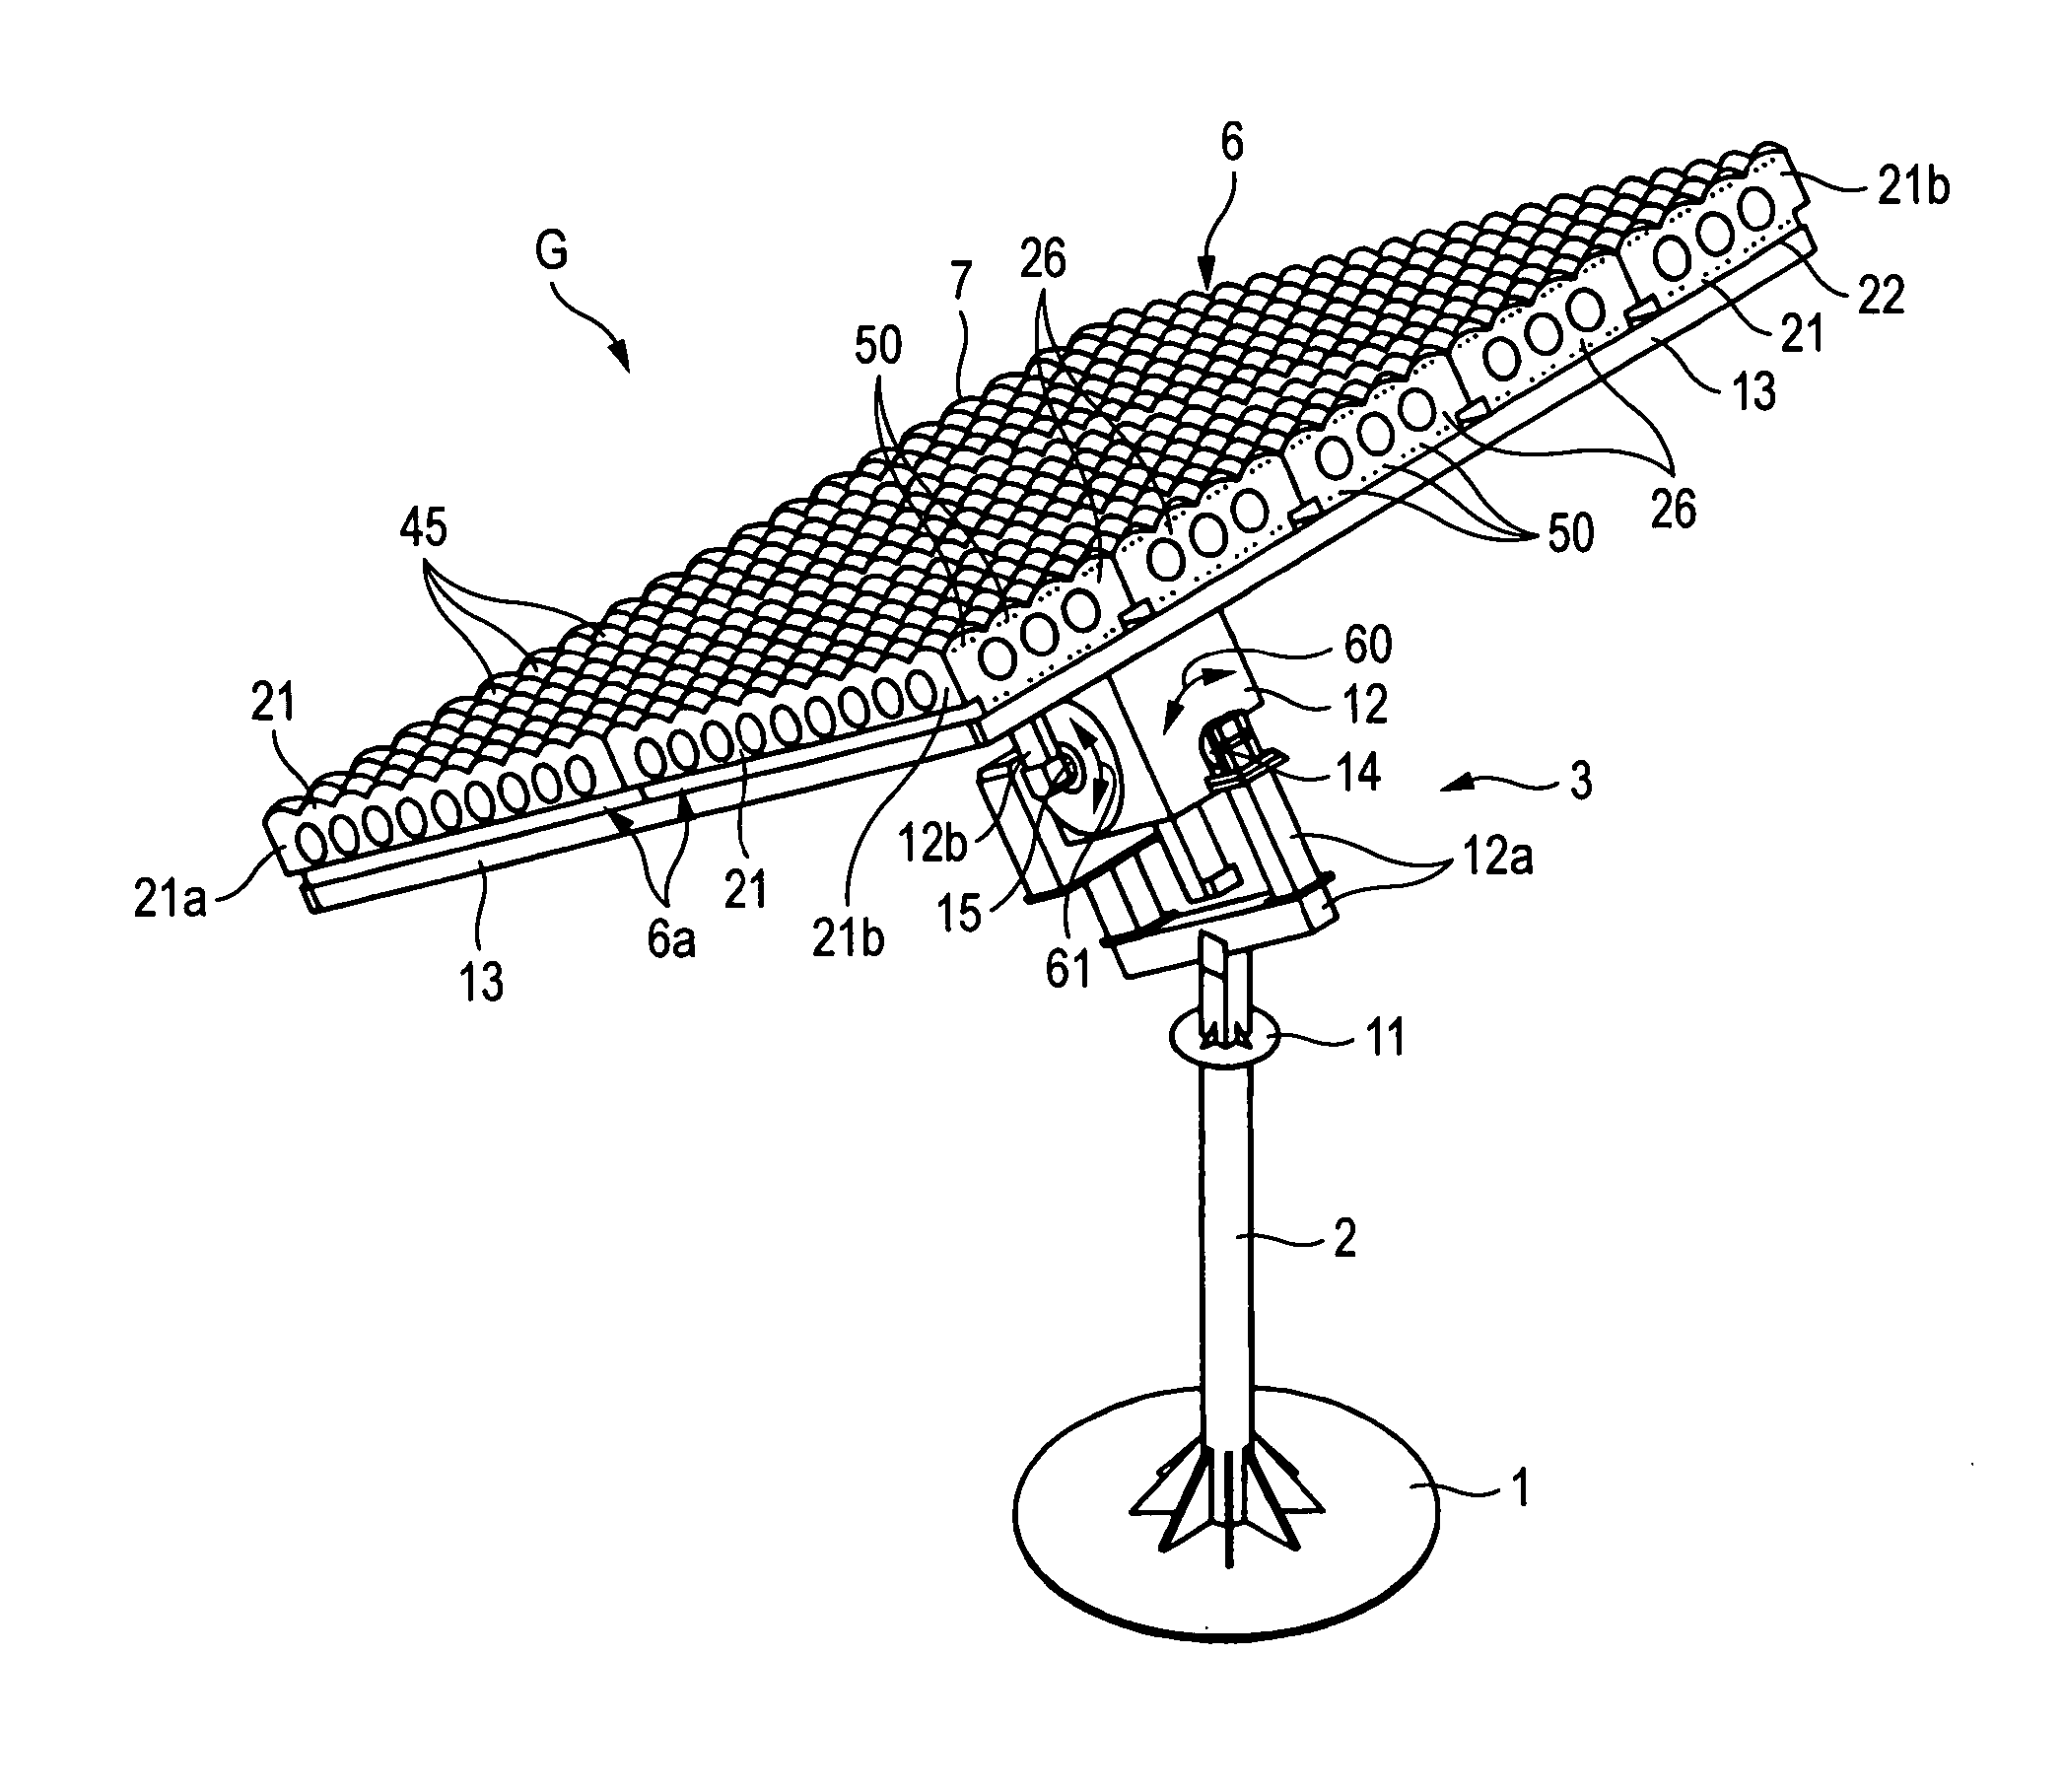 Light converging-type solar photovoltaic apparatus